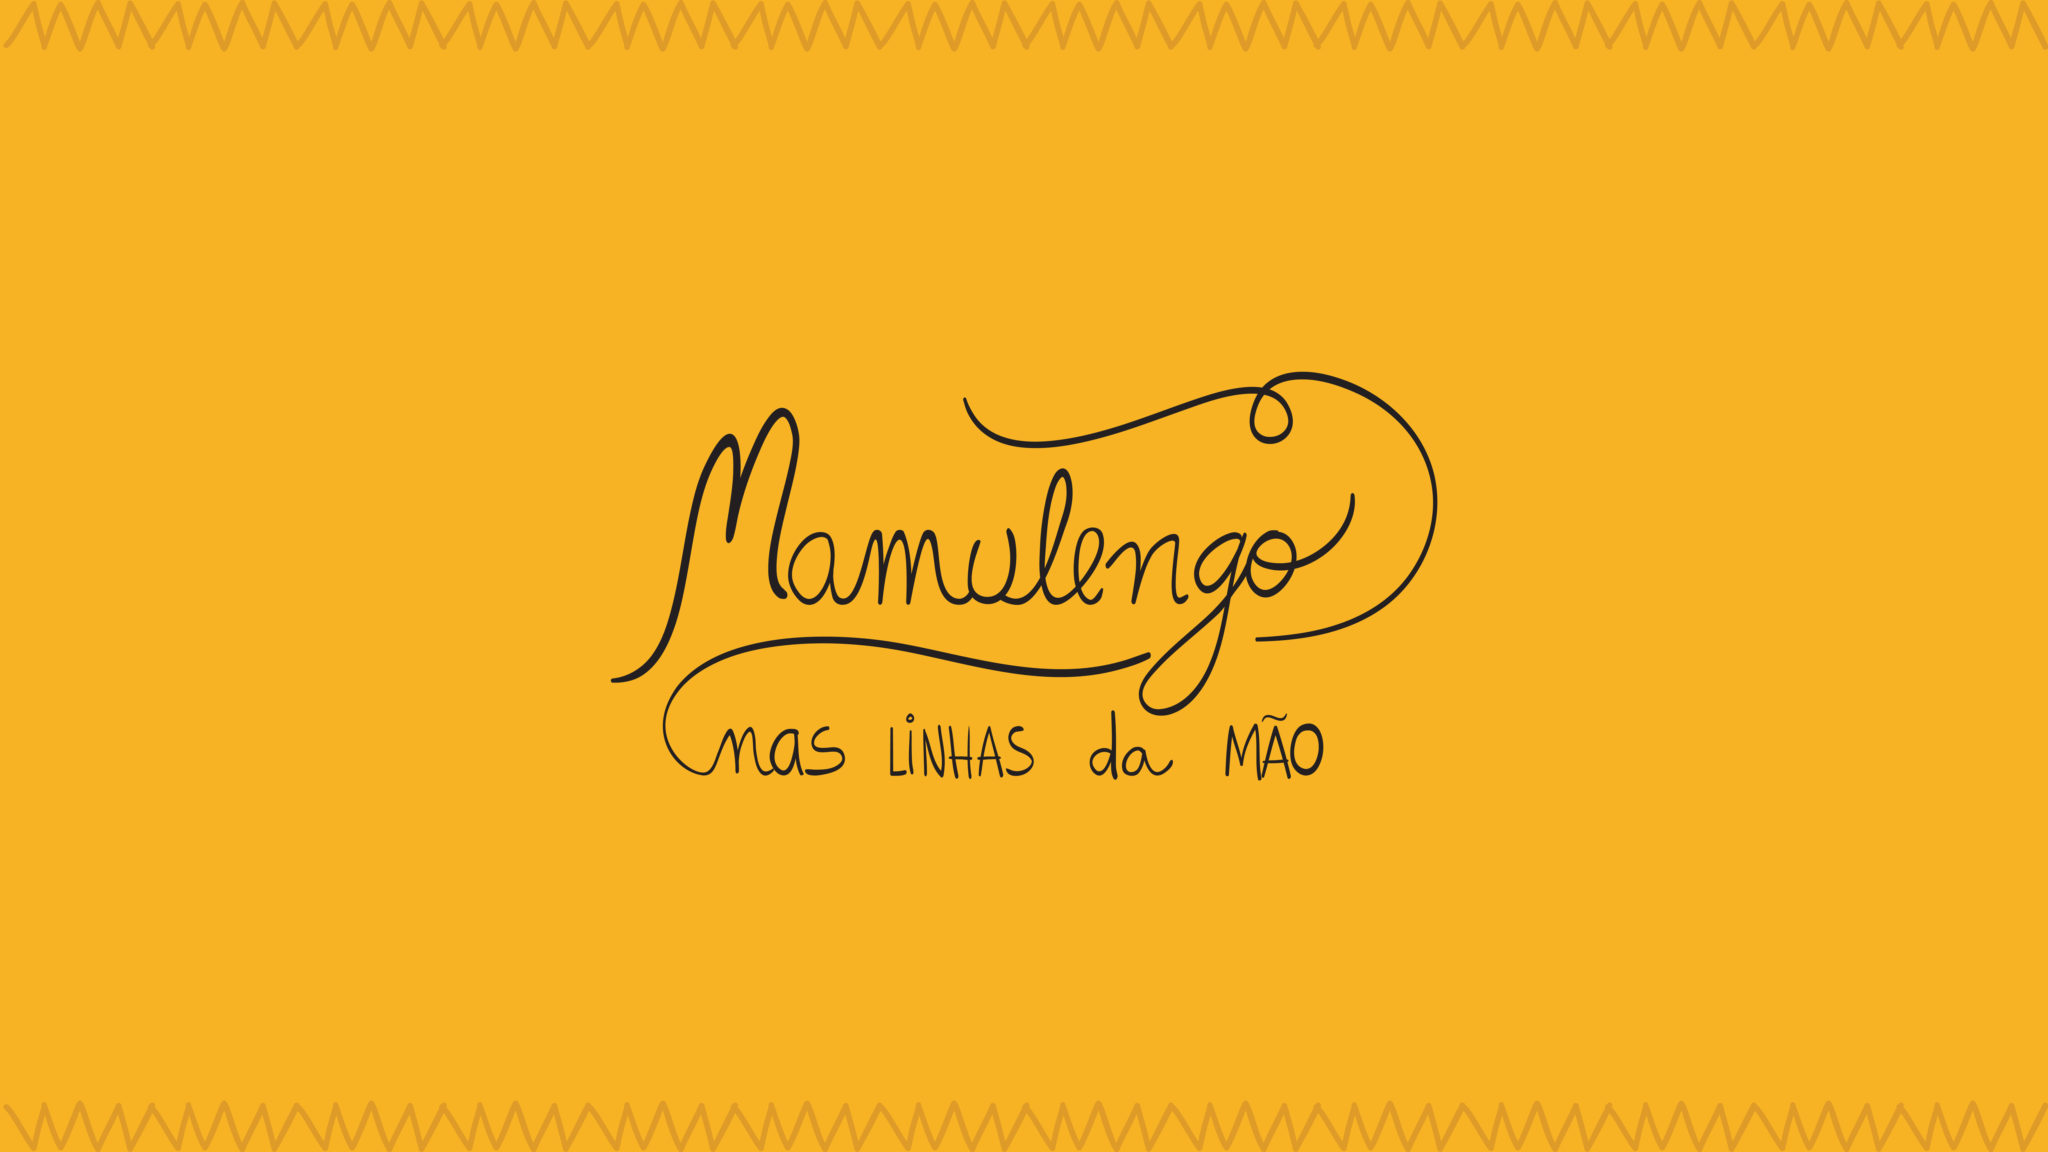 Mamulengo